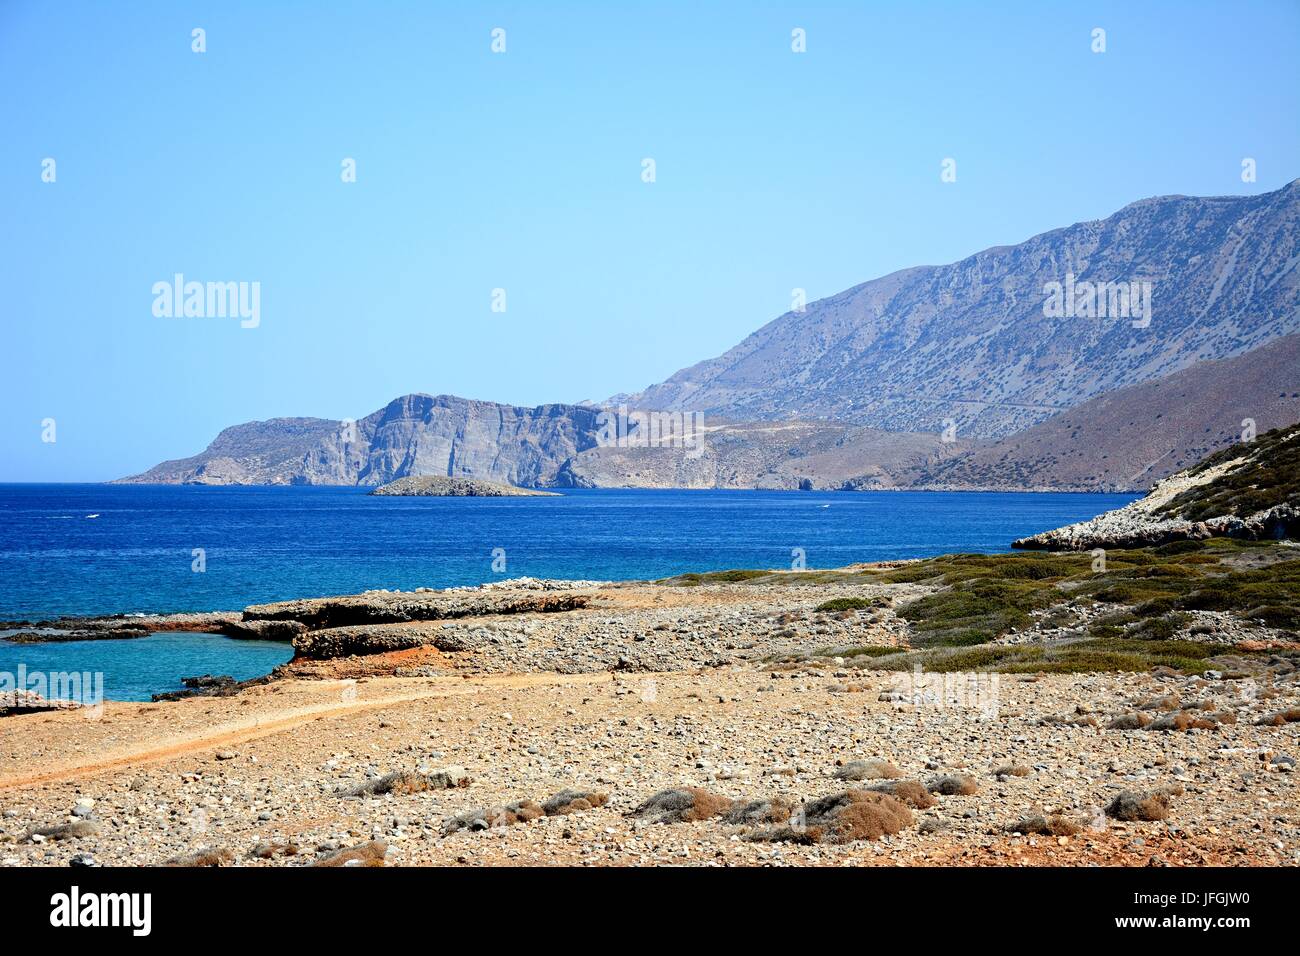 View of the beach and rugged coastline near Ammoudara, Crete, Greece, Europe. Stock Photo